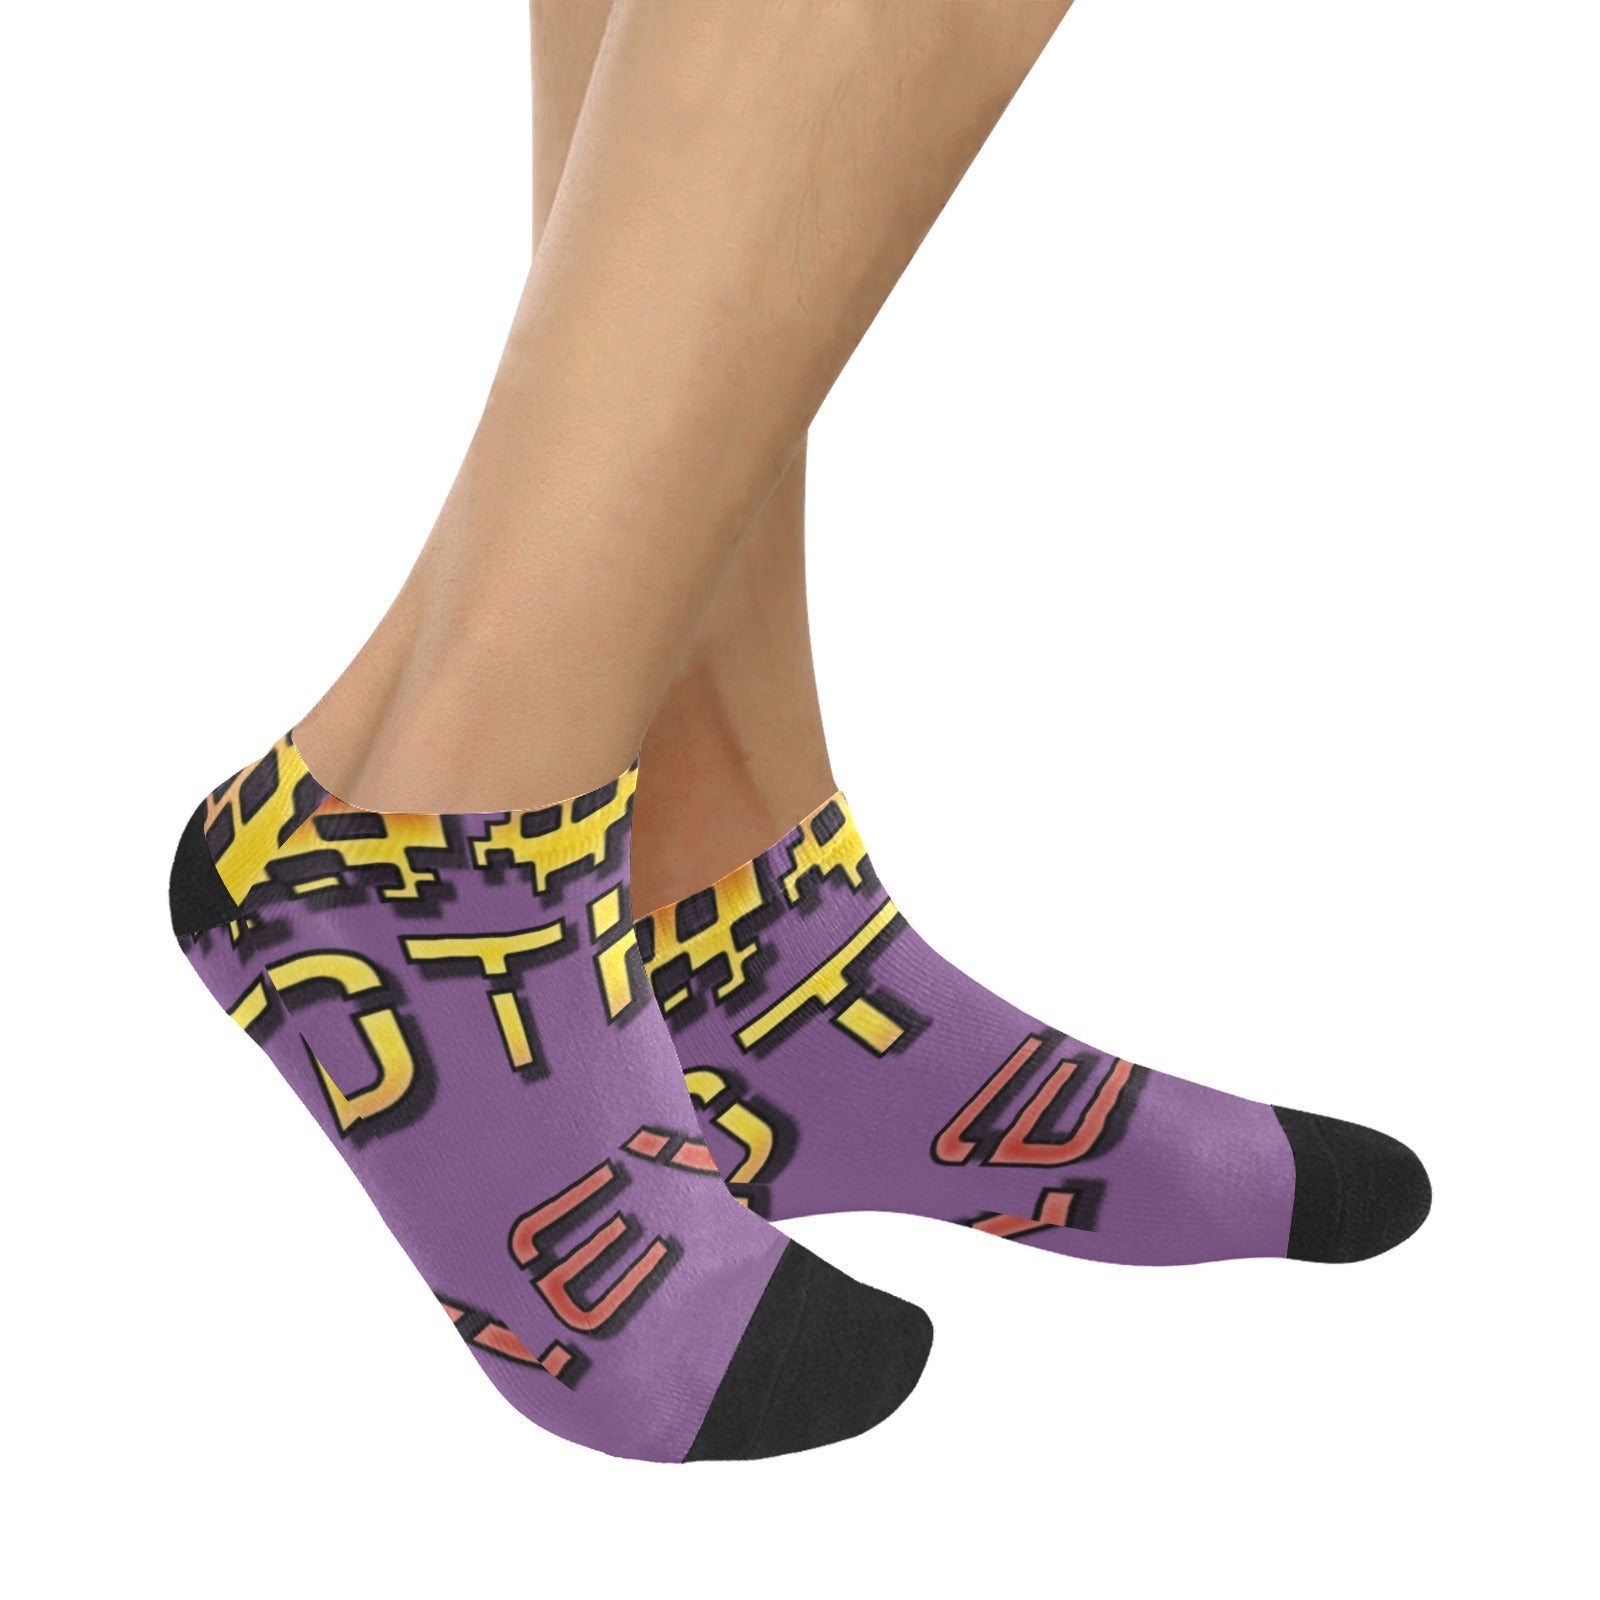 fz men's levels ankle socks one size / fz levels socks - purple men's ankle socks